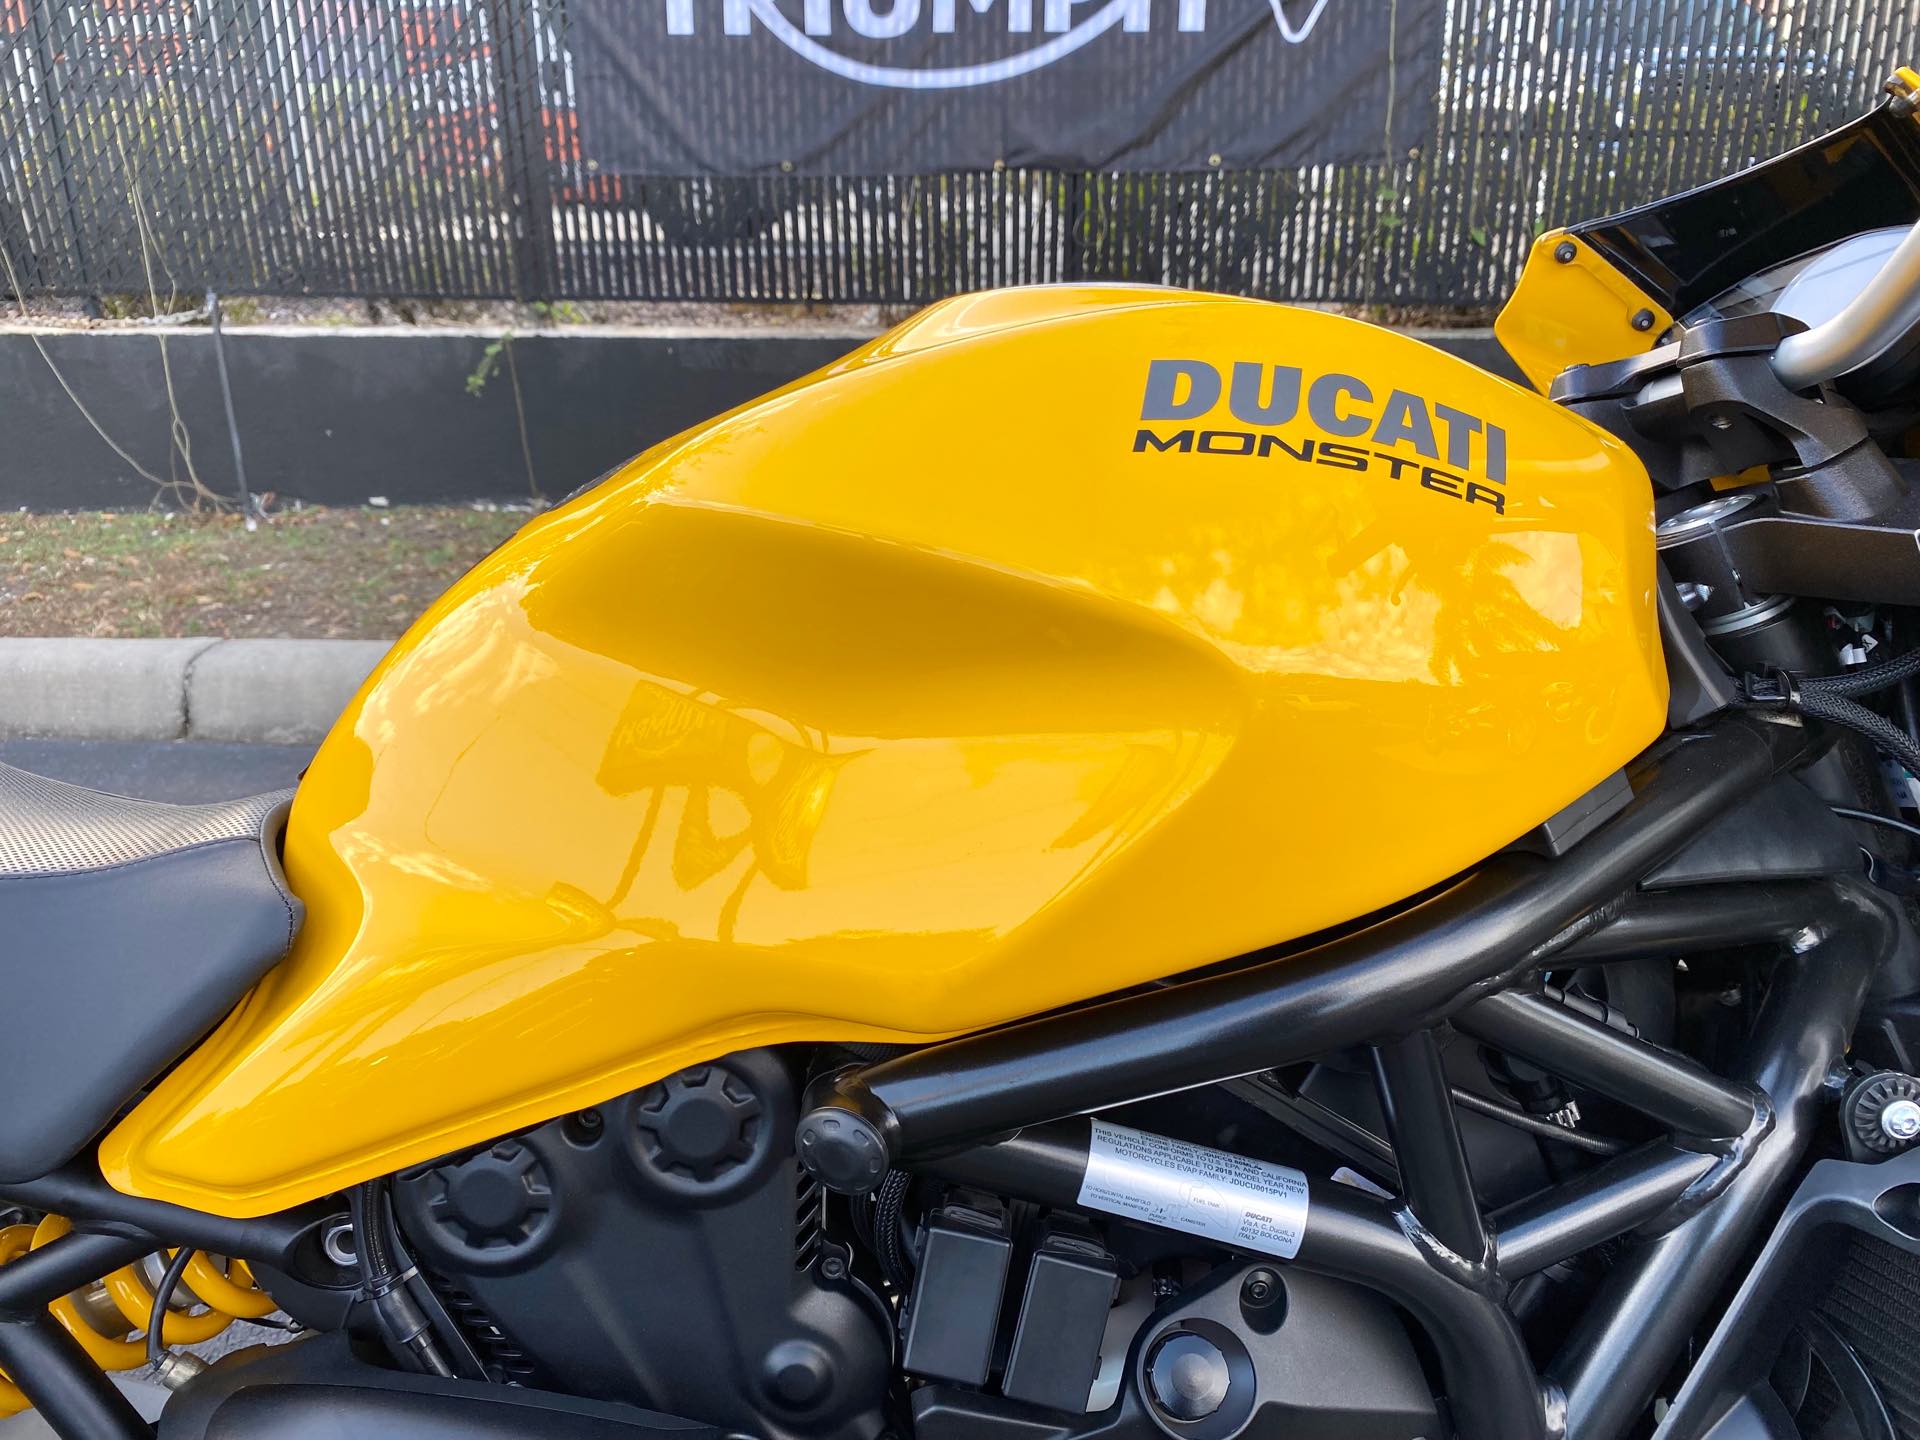 2018 Ducati Monster 821 at Tampa Triumph, Tampa, FL 33614